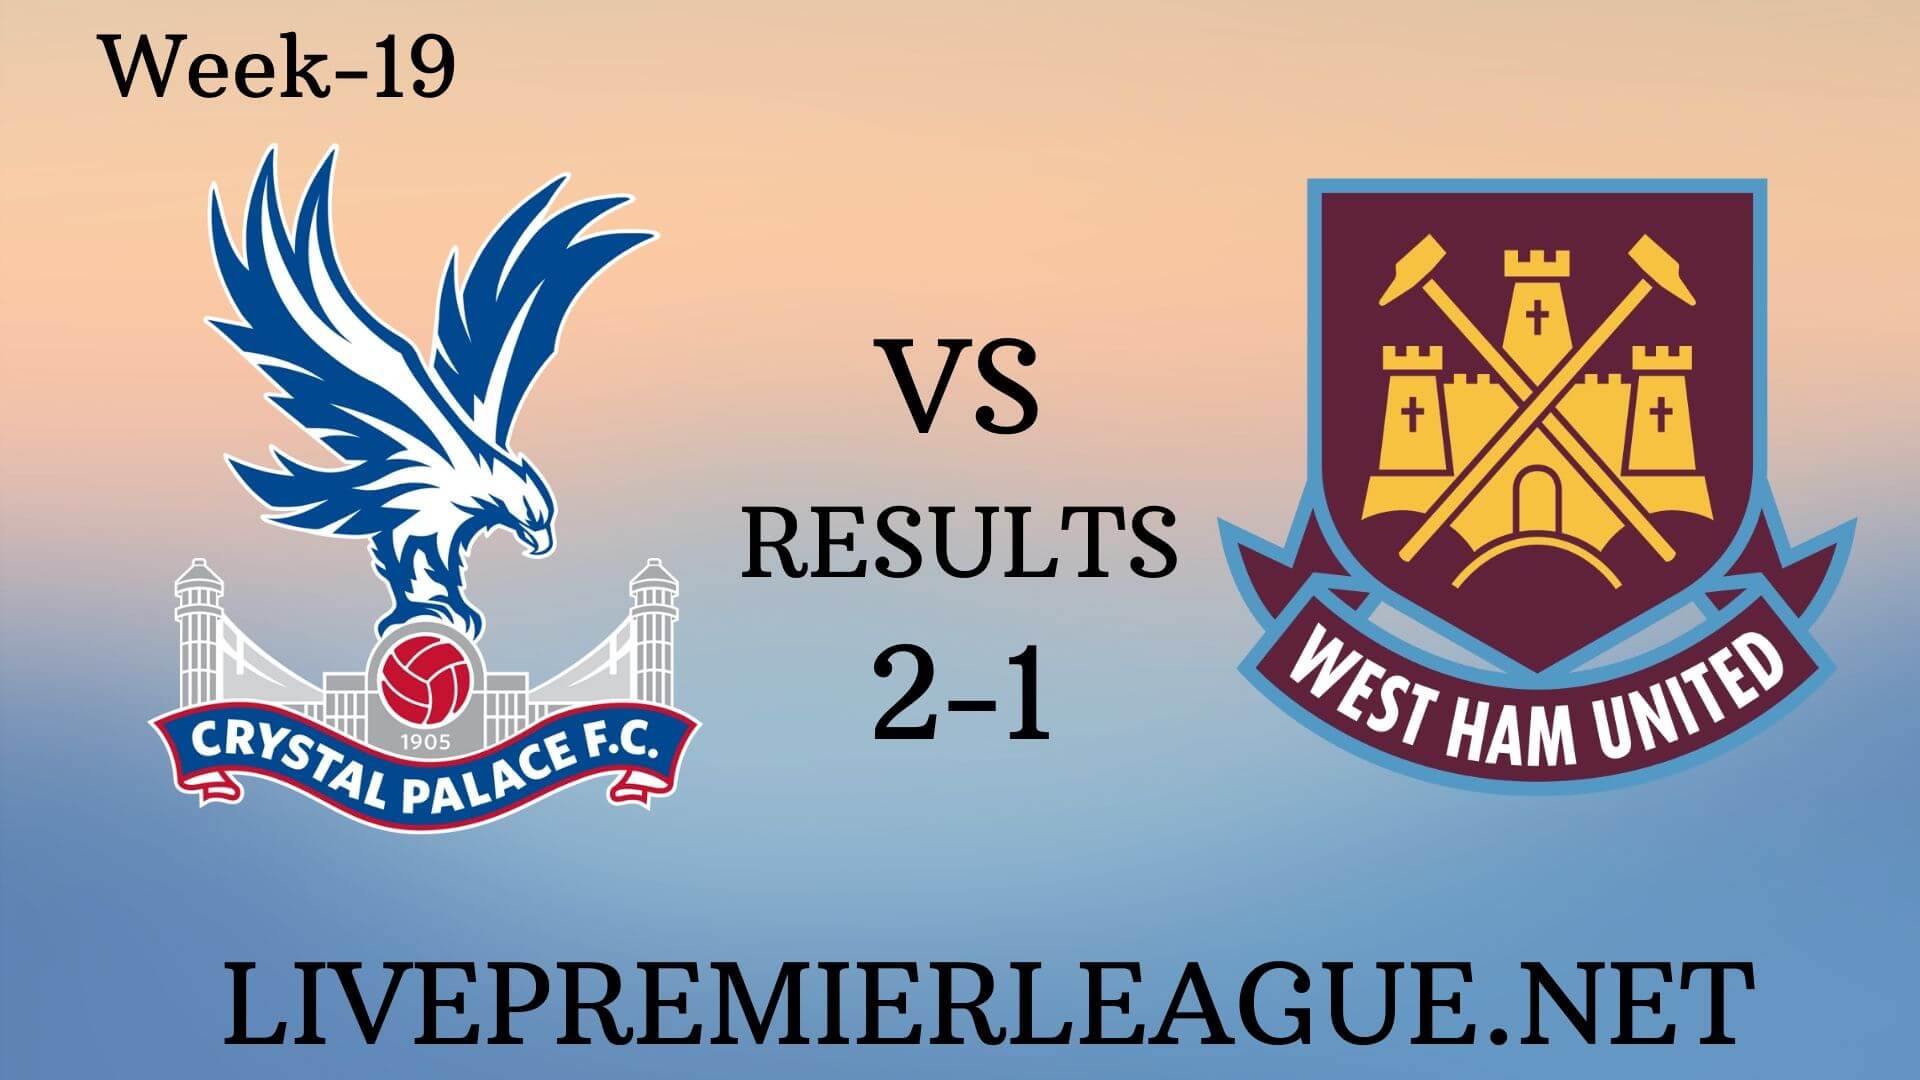 Crystal Palace Vs West Ham United | Week 19 Result 2019